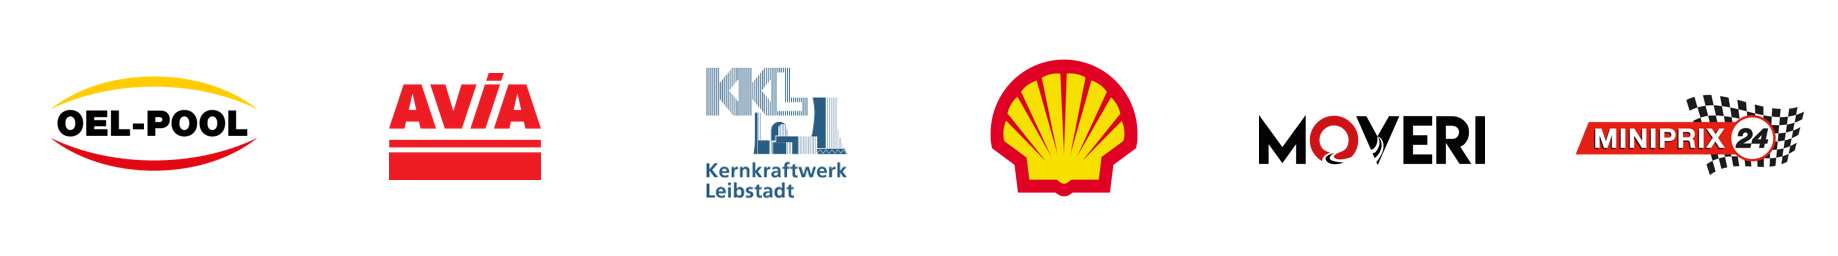 GRITEBA Kunden Logos: OEL-POOL, AVIA, KKL, Shell, MOVERI, MINIPRIX